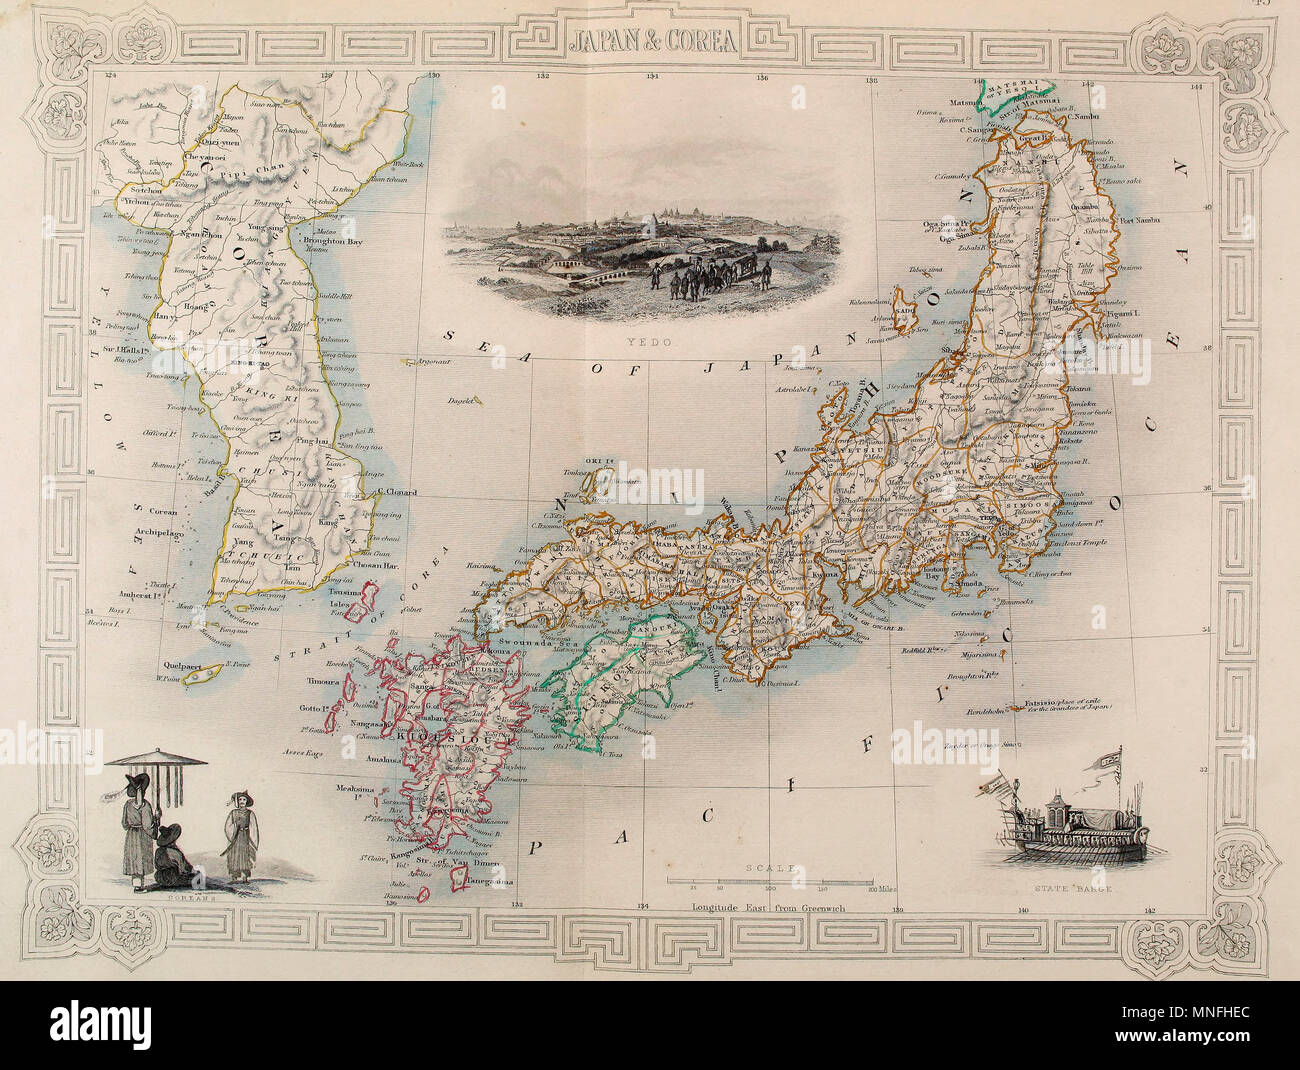 Map of Japan and Corea, circa 1858 Stock Photo